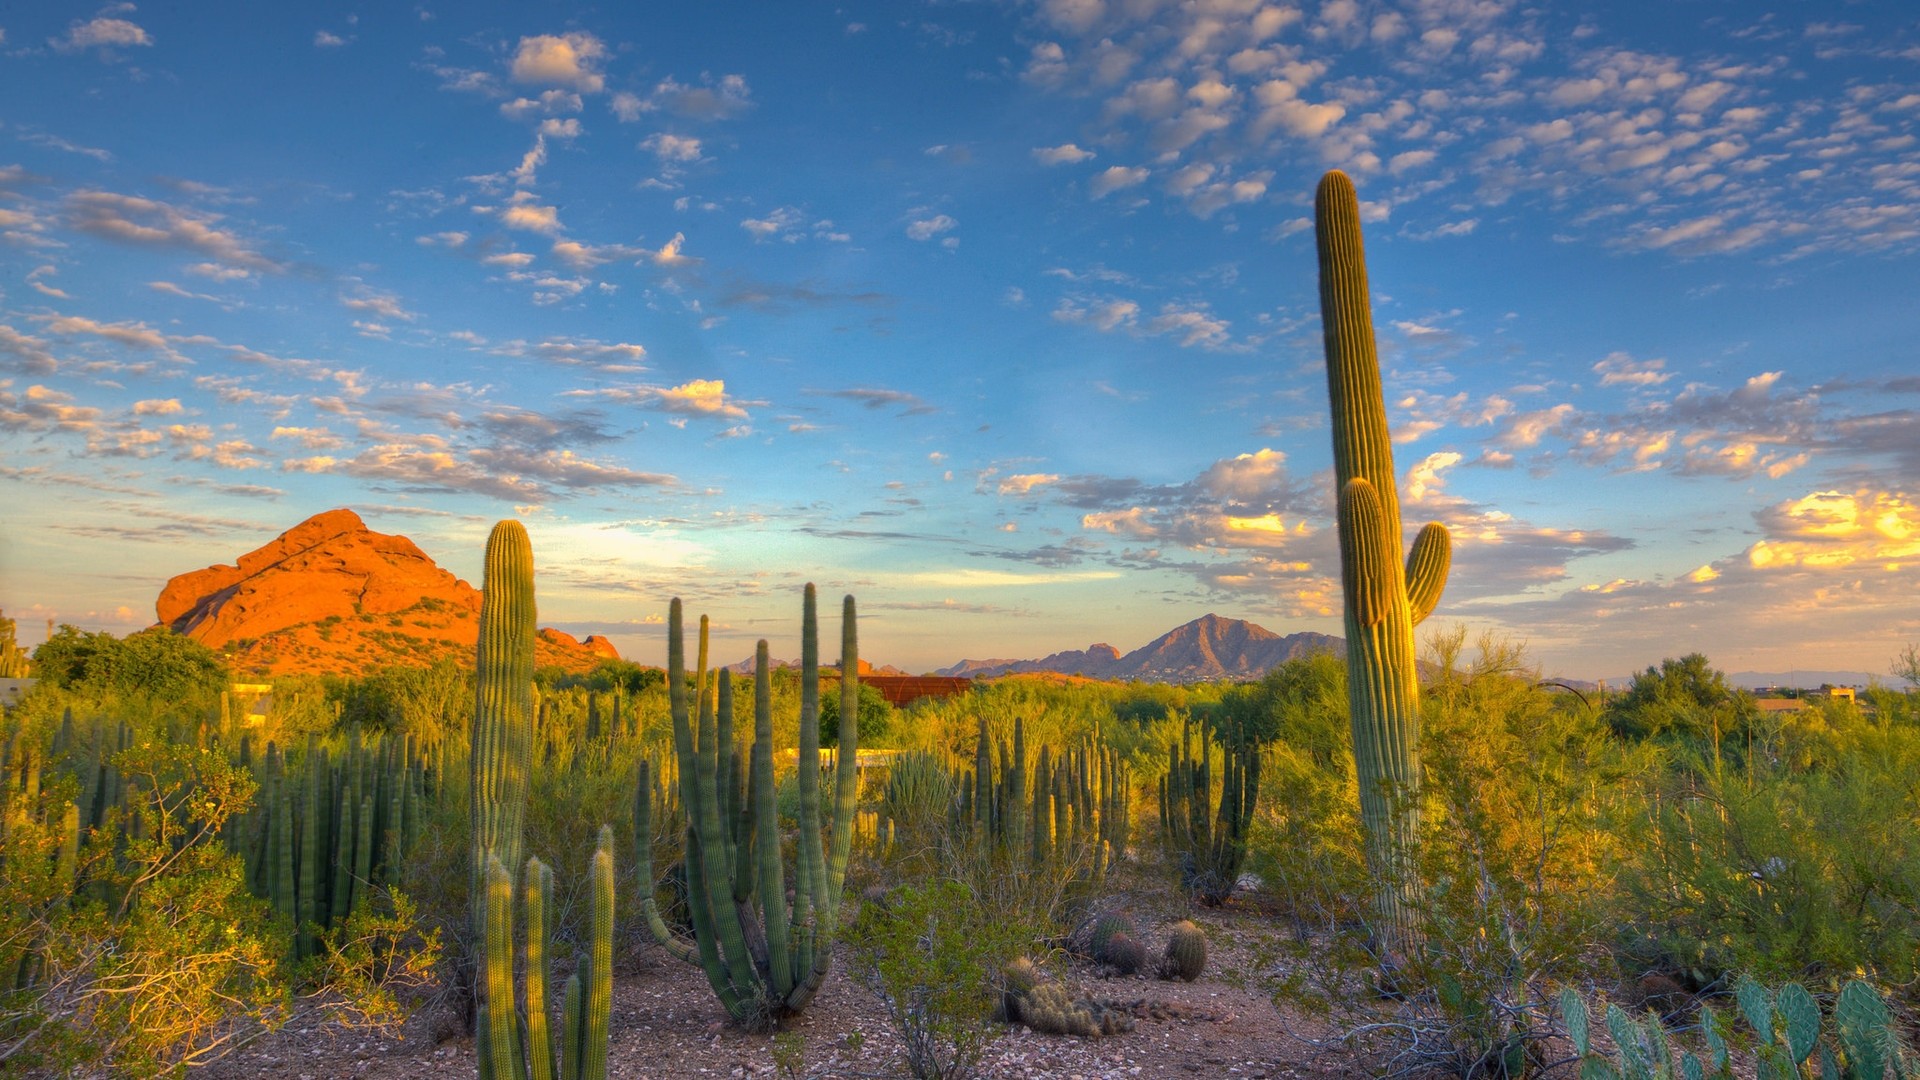 General 1920x1080 landscape nature desert cactus mountains Arizona USA plants outdoors sky